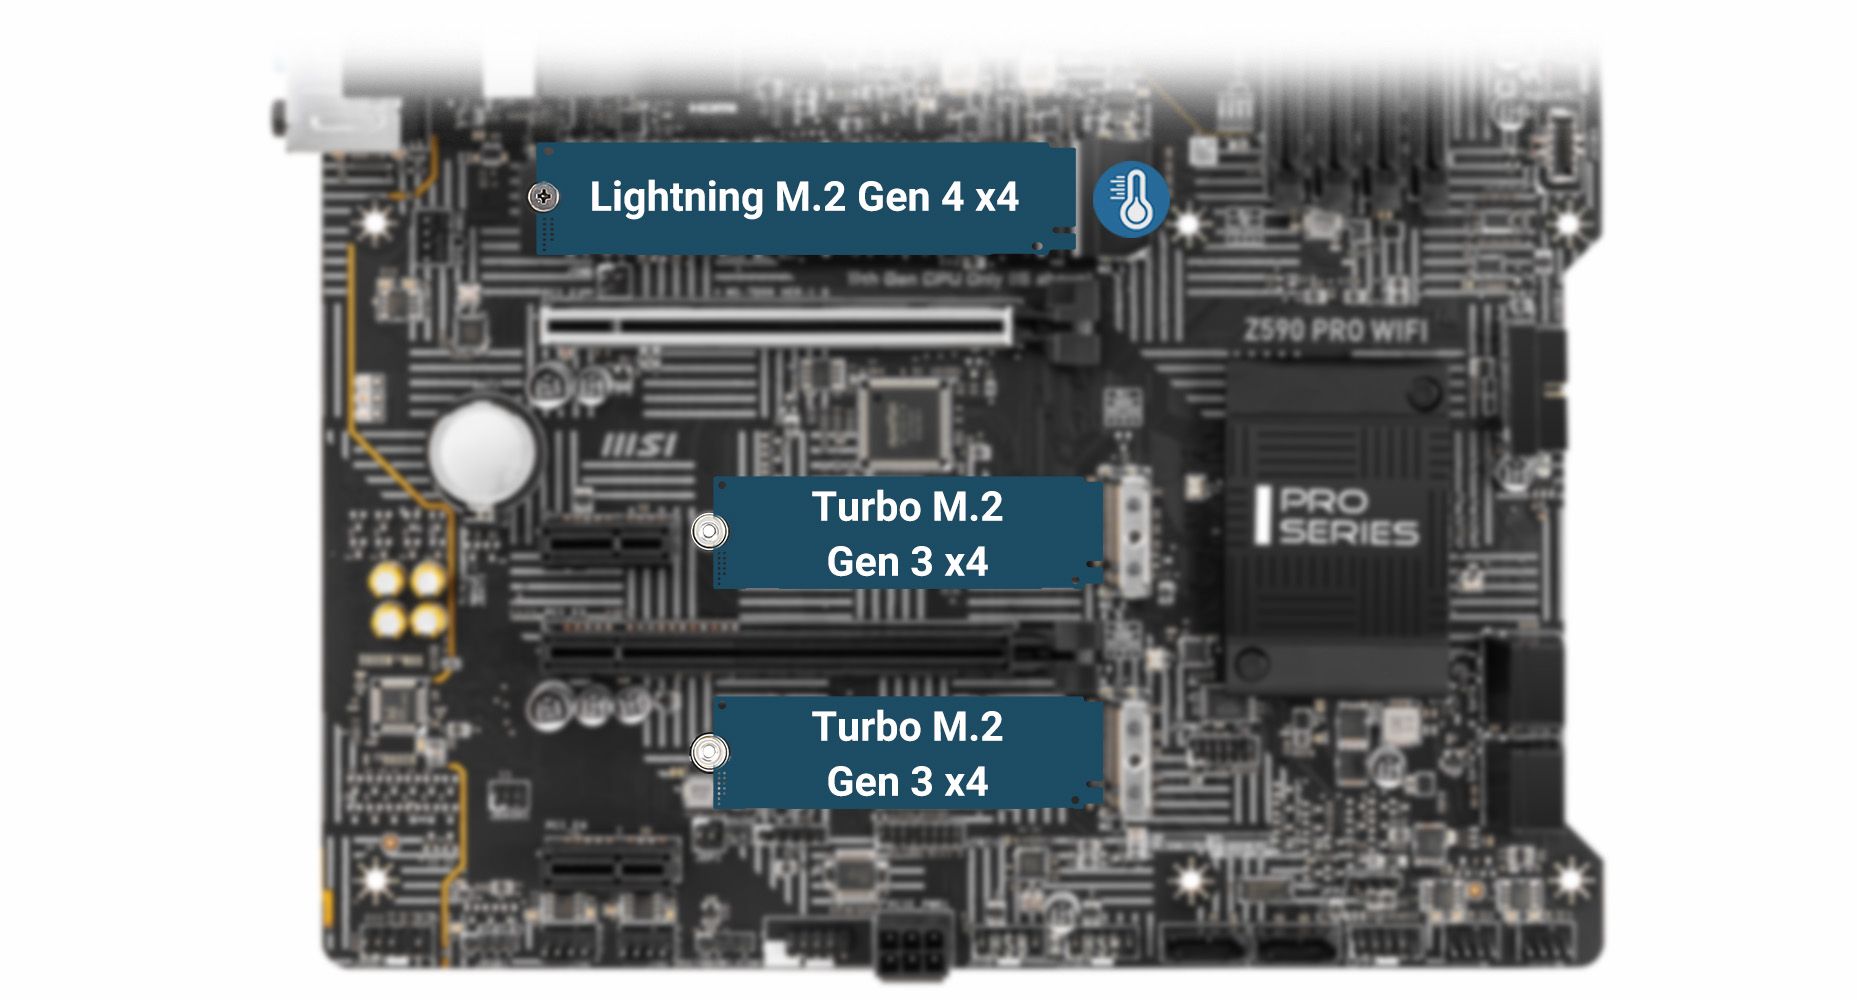 MSI Z590 PRO WIFI LIGHTNING GEN 4 M.2 WITH M.2 SHIELD FROZR